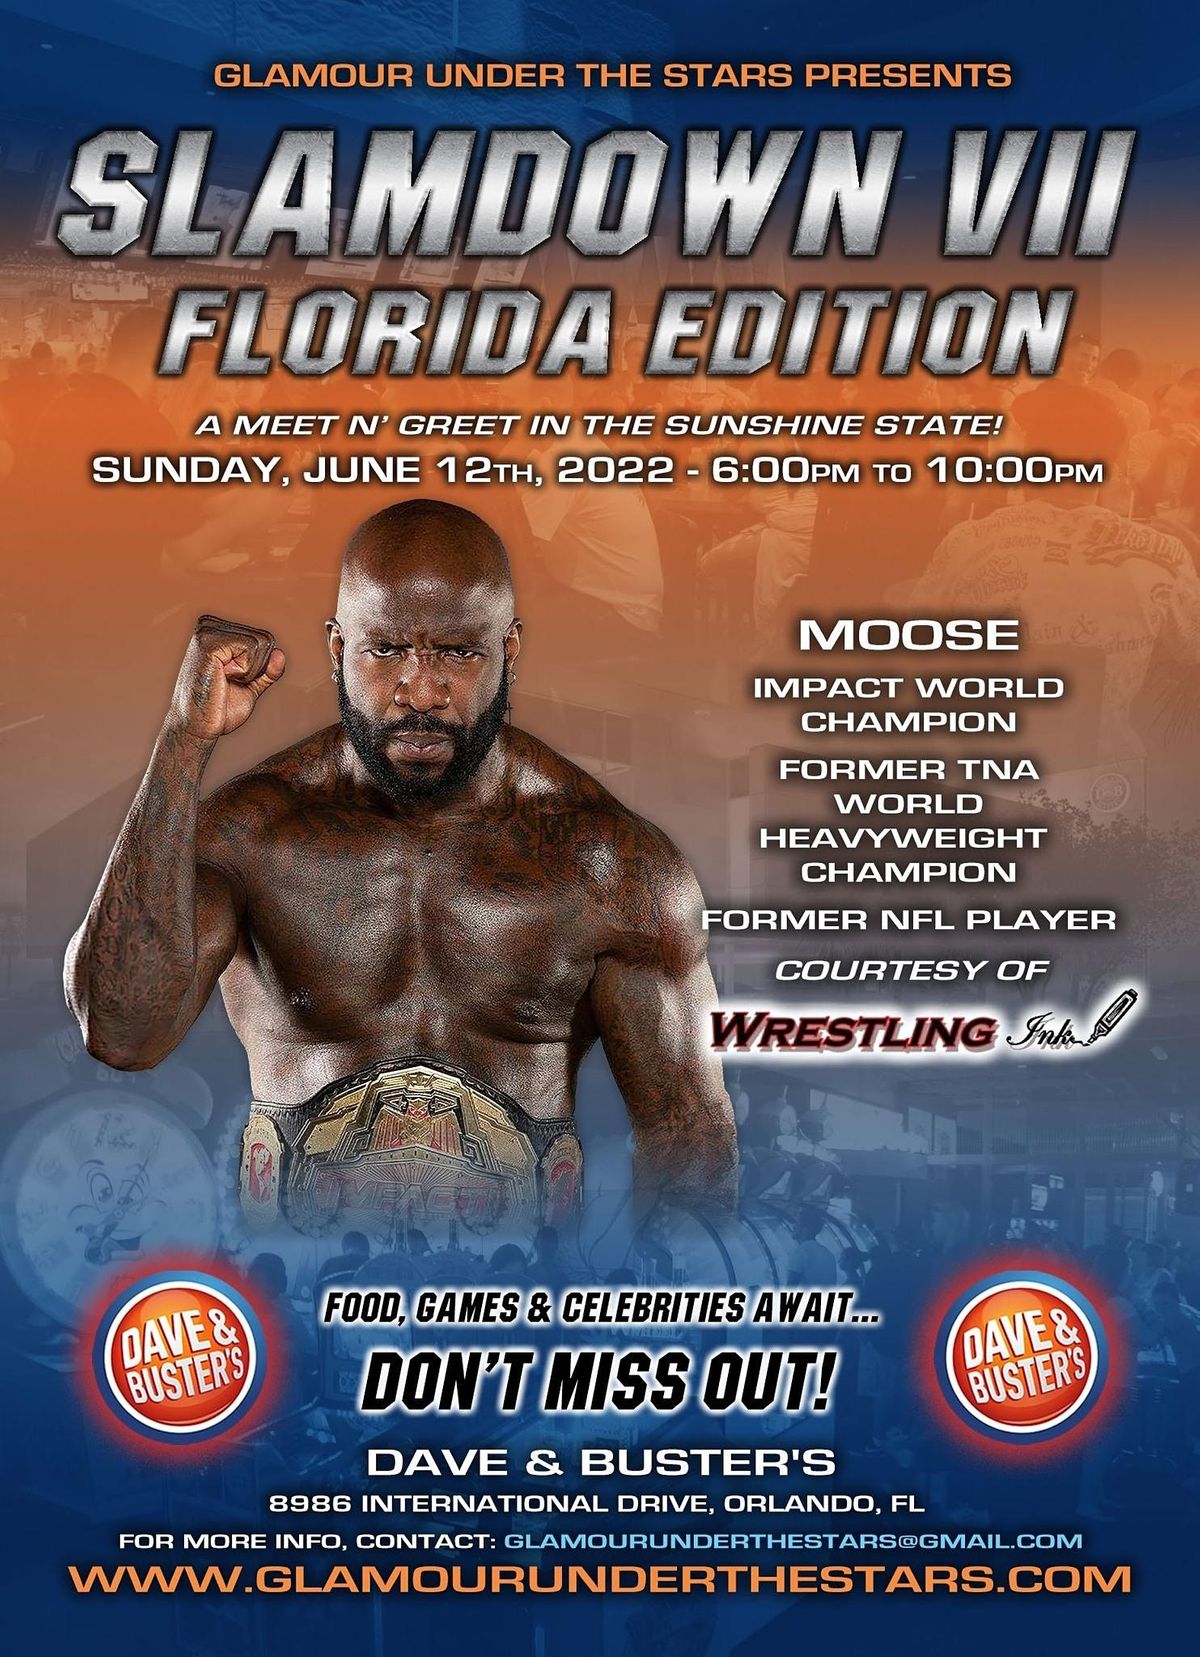 Impact Star Moose to Appear at Slamdown Orlando Florida 06\/12\/2022